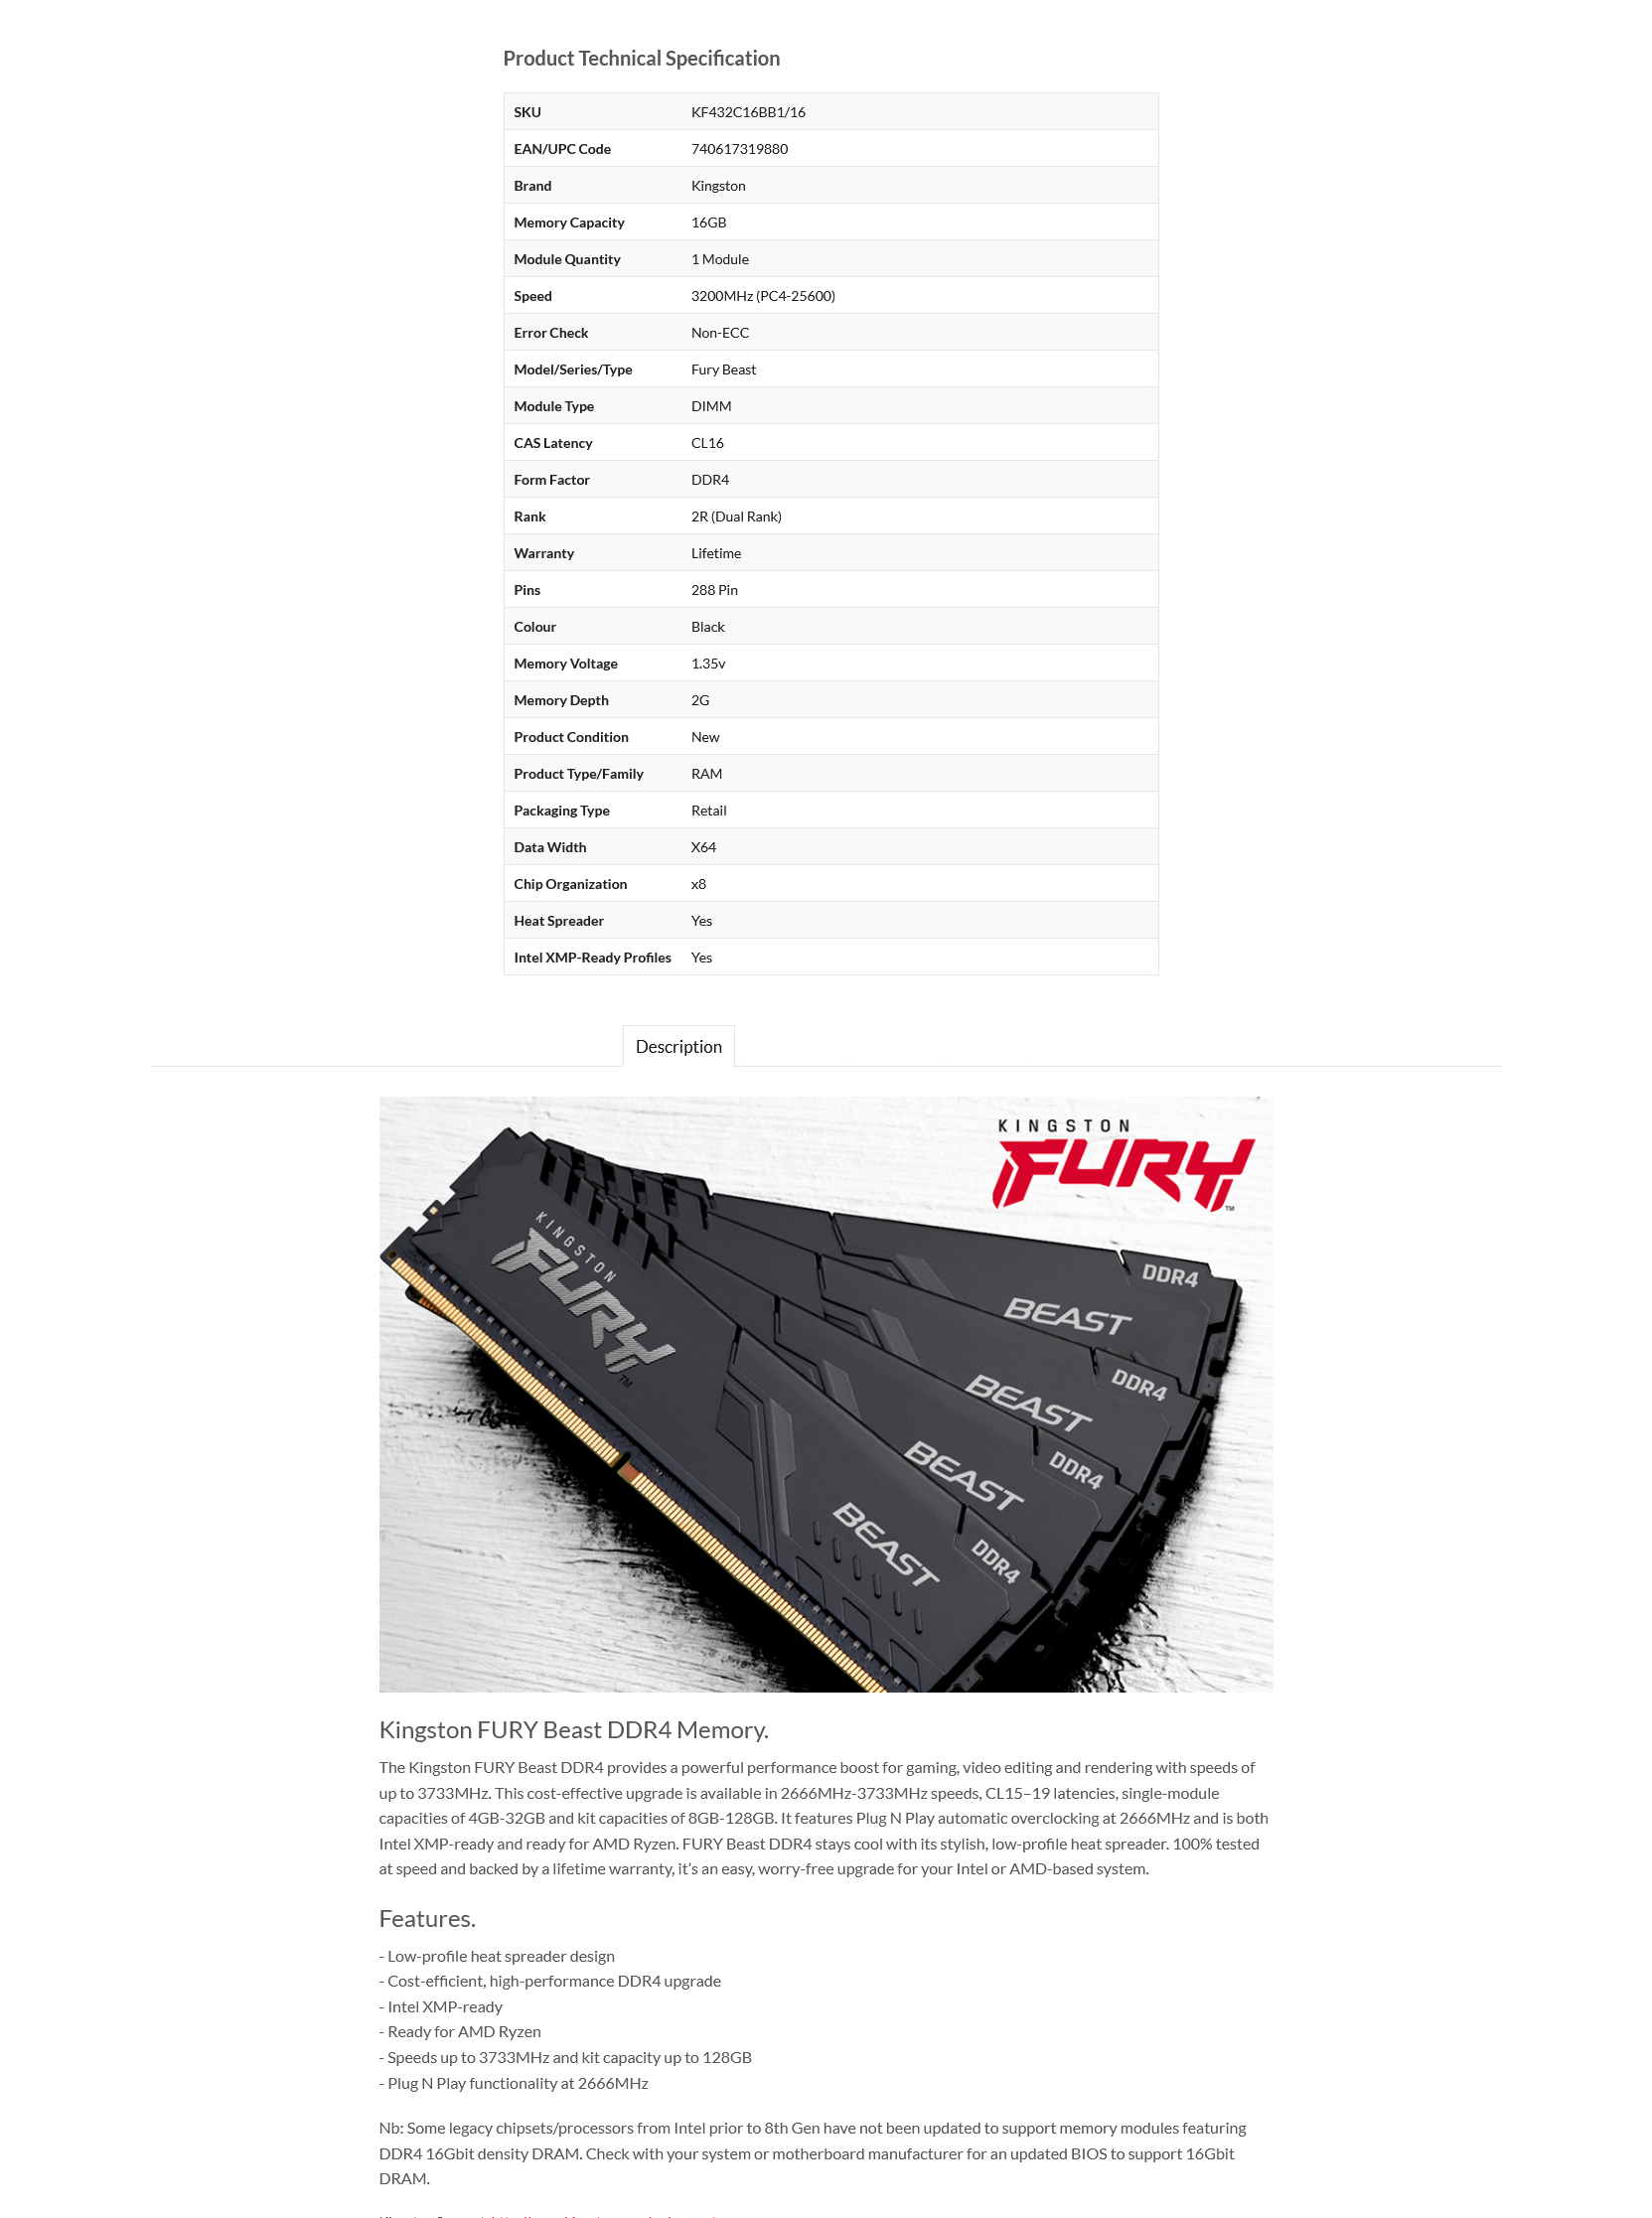 Kingston HyperX FURY DDR4 16GB 3200 MHz PC4-25600 Desktop RAM